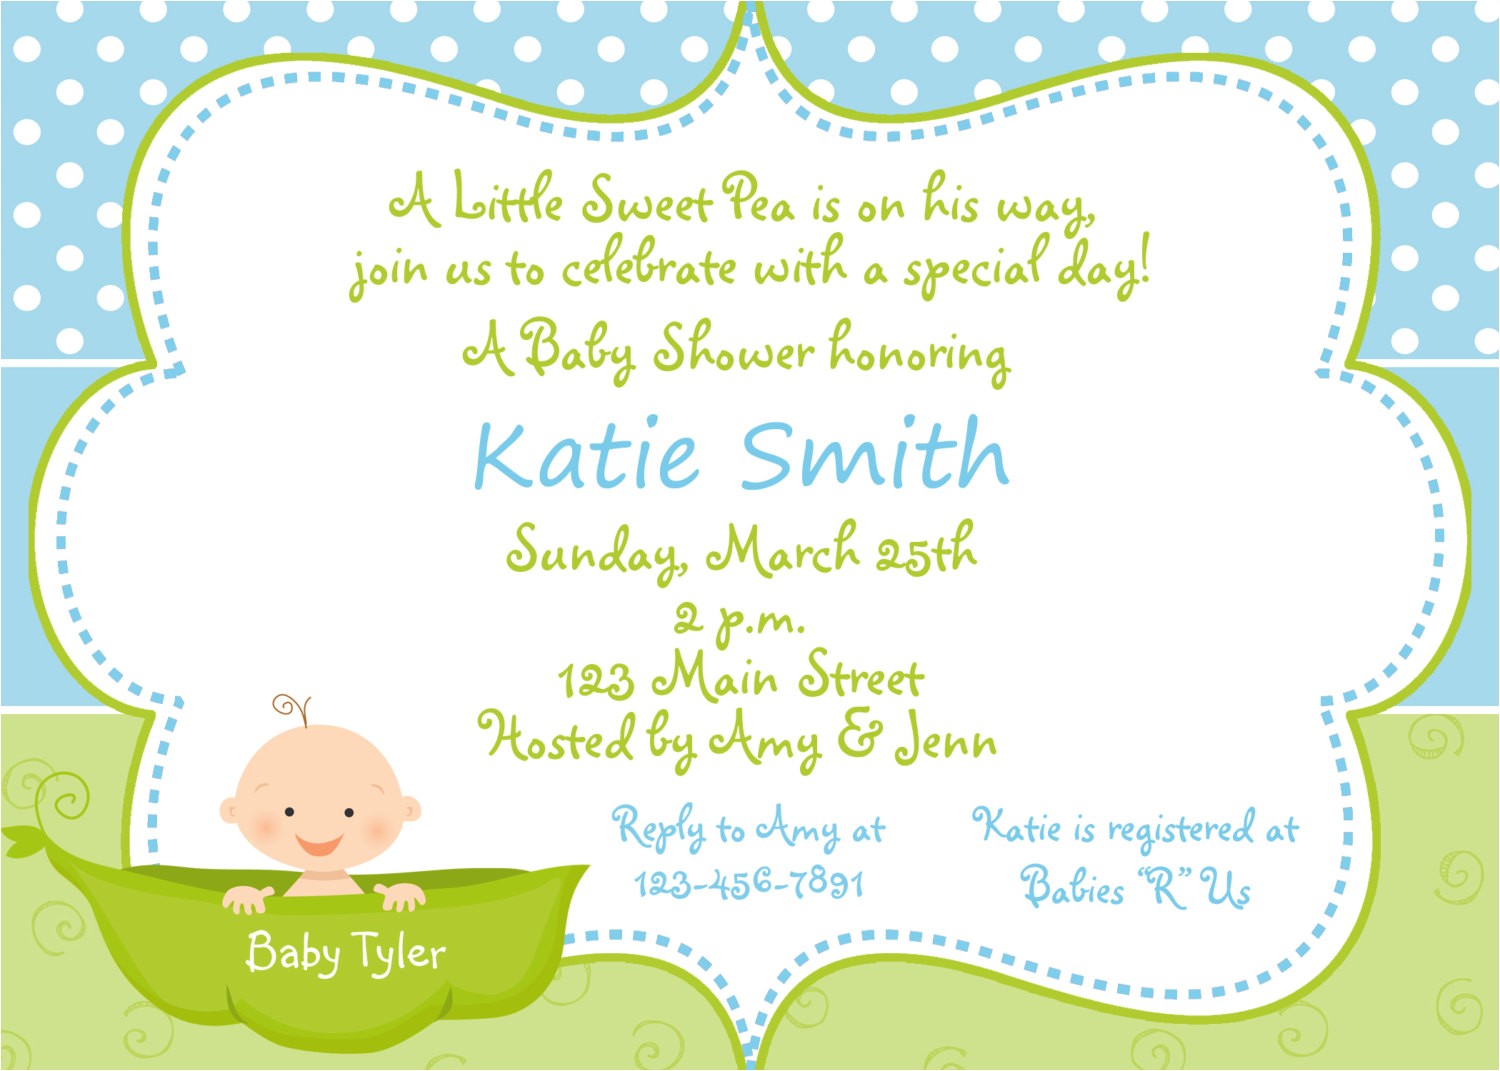 Baby Shower Video Invitation Maker Design Baby Shower Invitation Maker Baby Shower